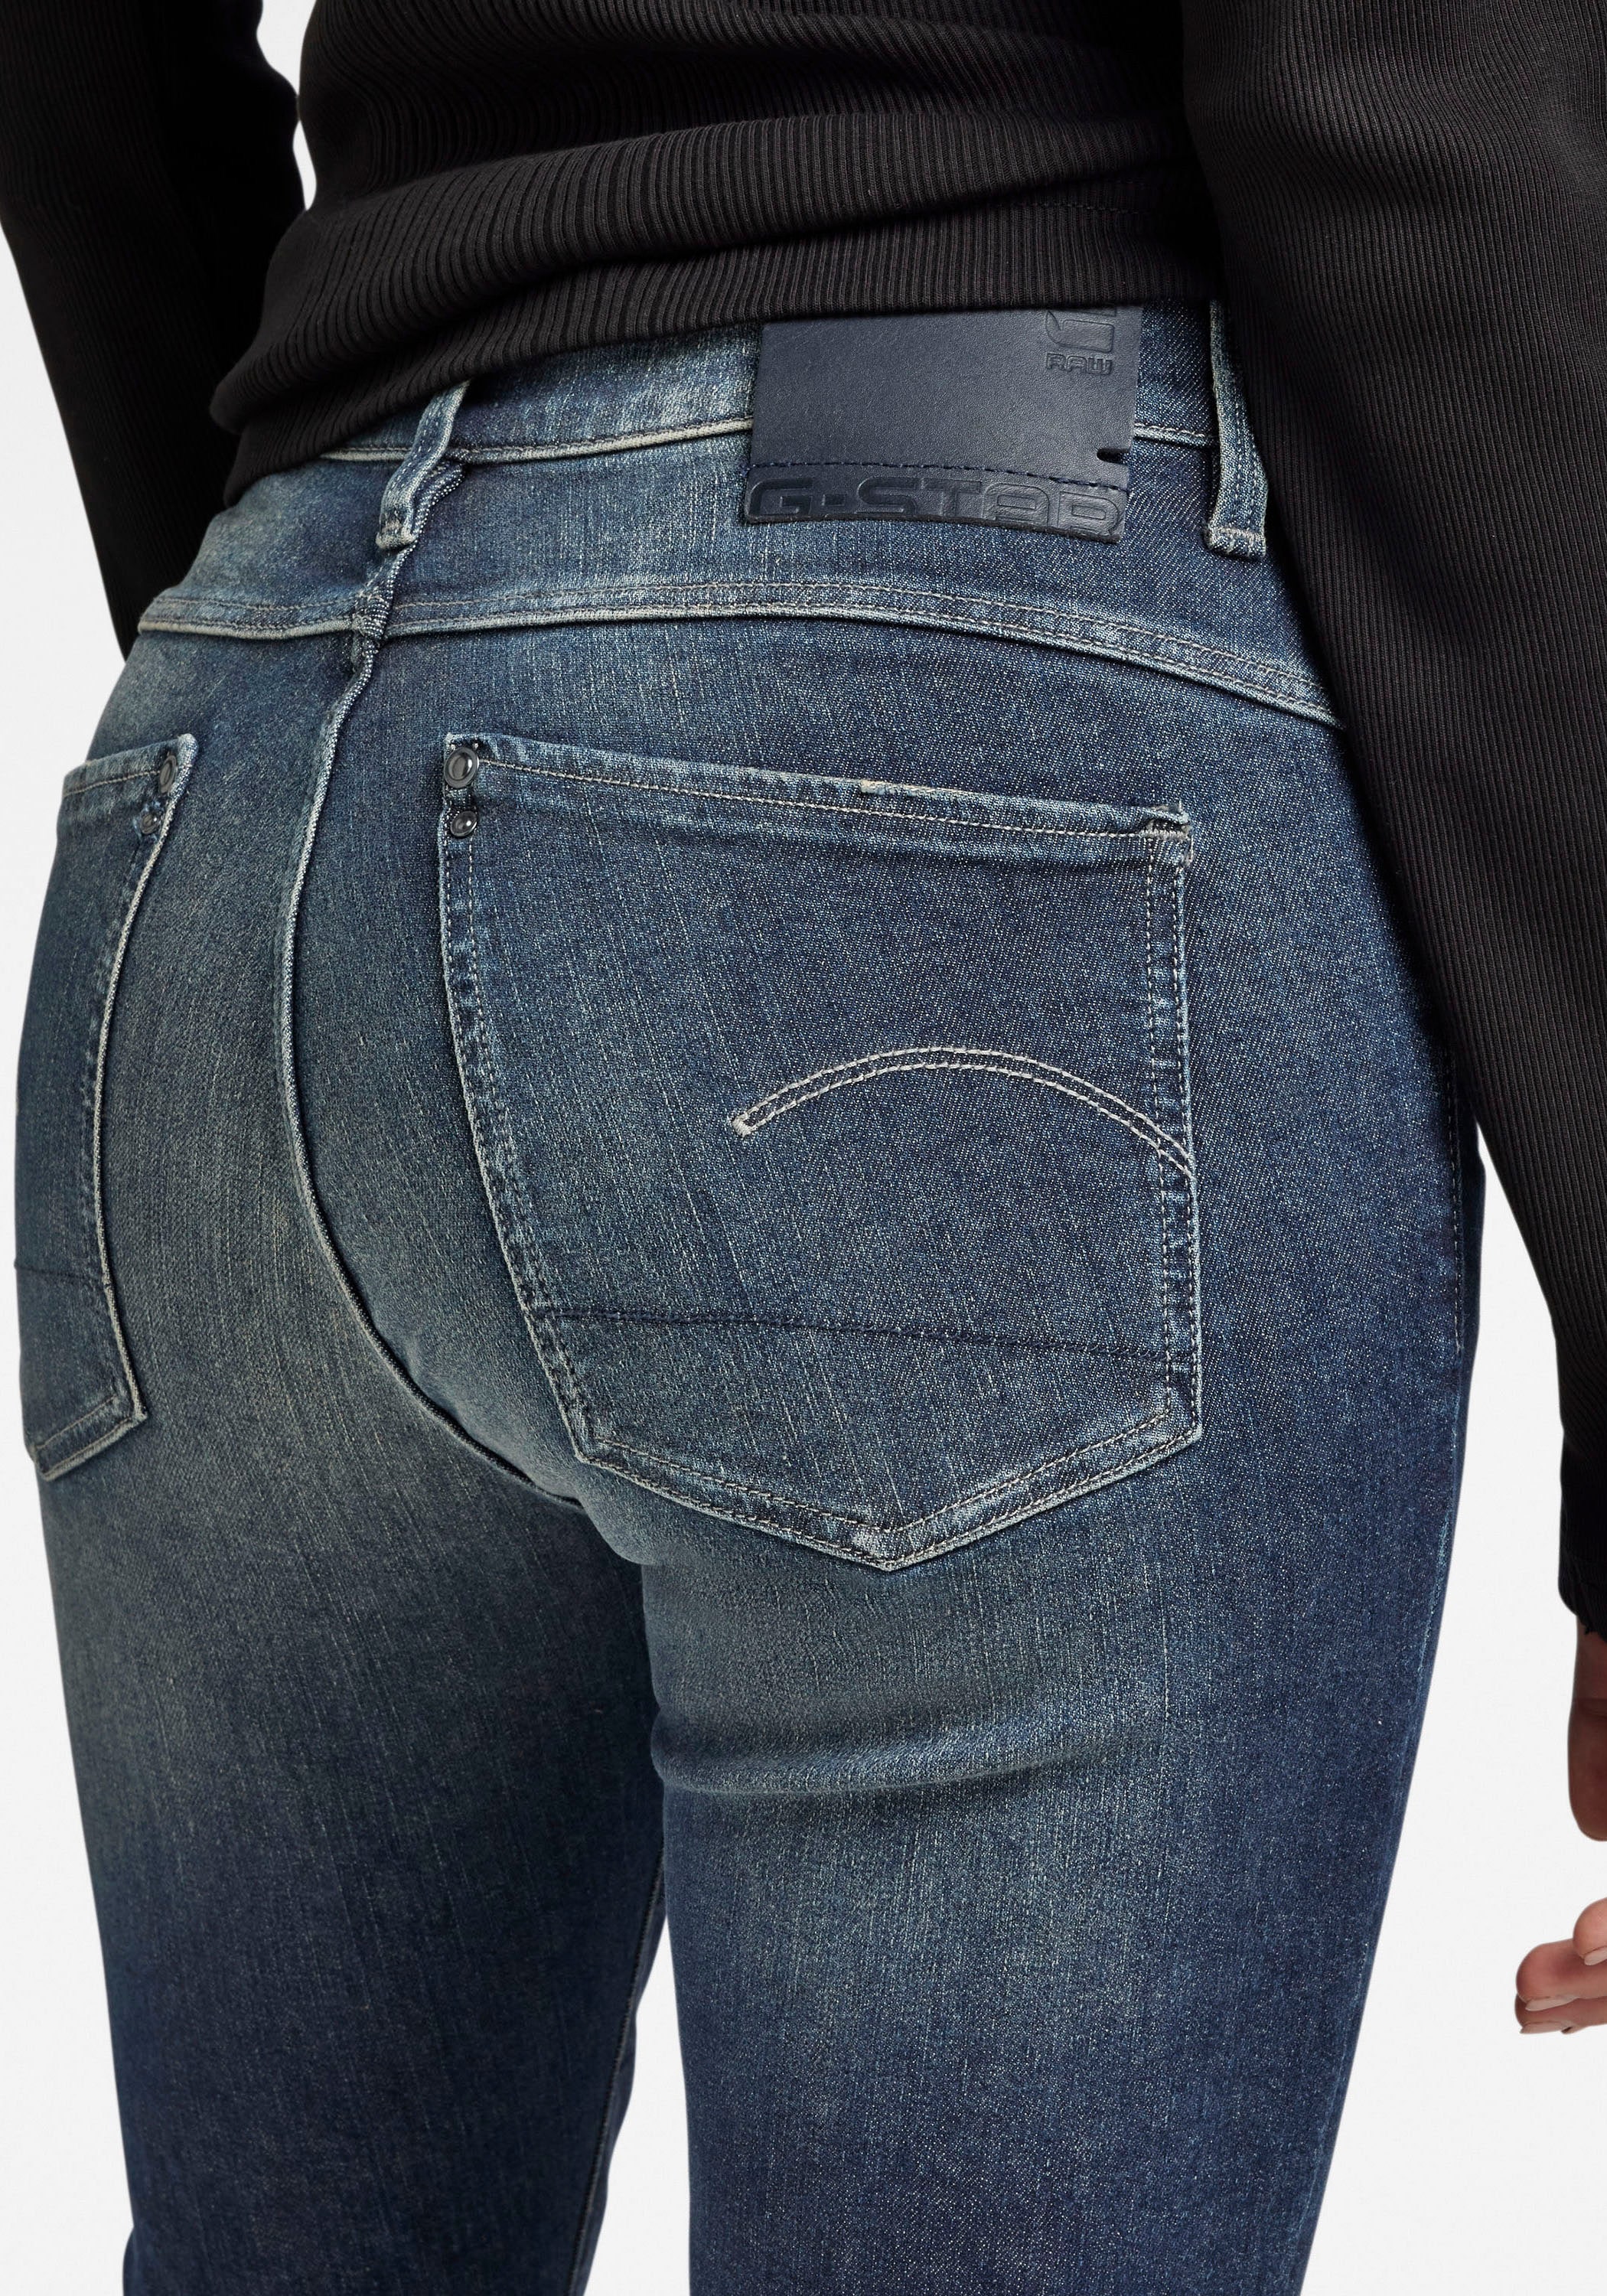 »Lhana Stretchanteil kaufen Skinny Jeans«, RAW durch Skinny-fit-Jeans mit G-Star Wohlfühlfaktor